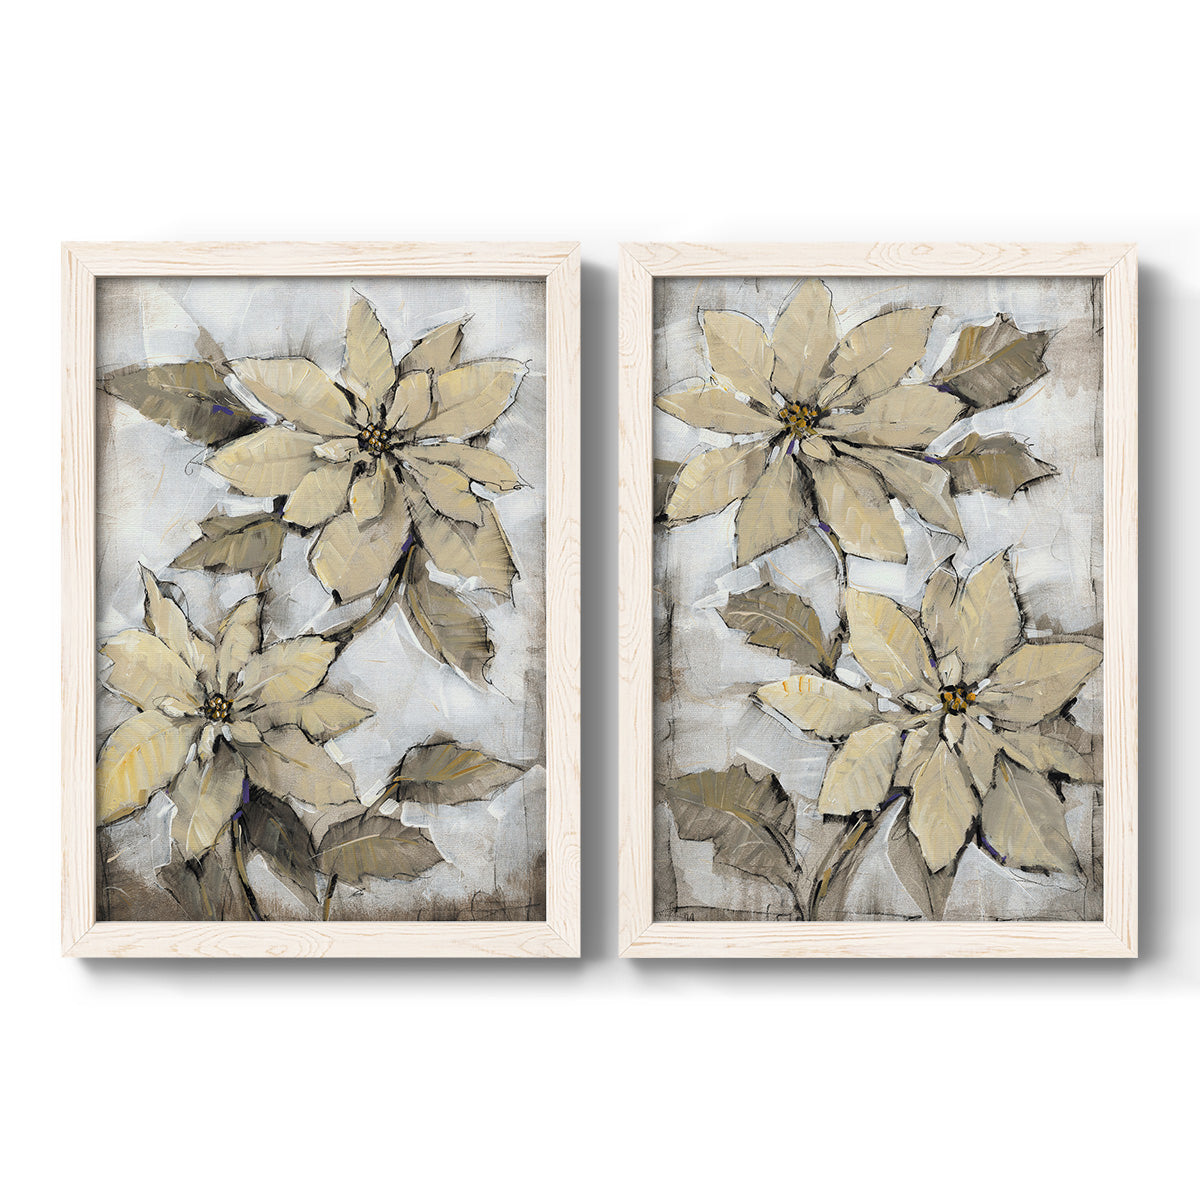 Poinsettia Study I - Premium Framed Canvas 2 Piece Set - Ready to Hang